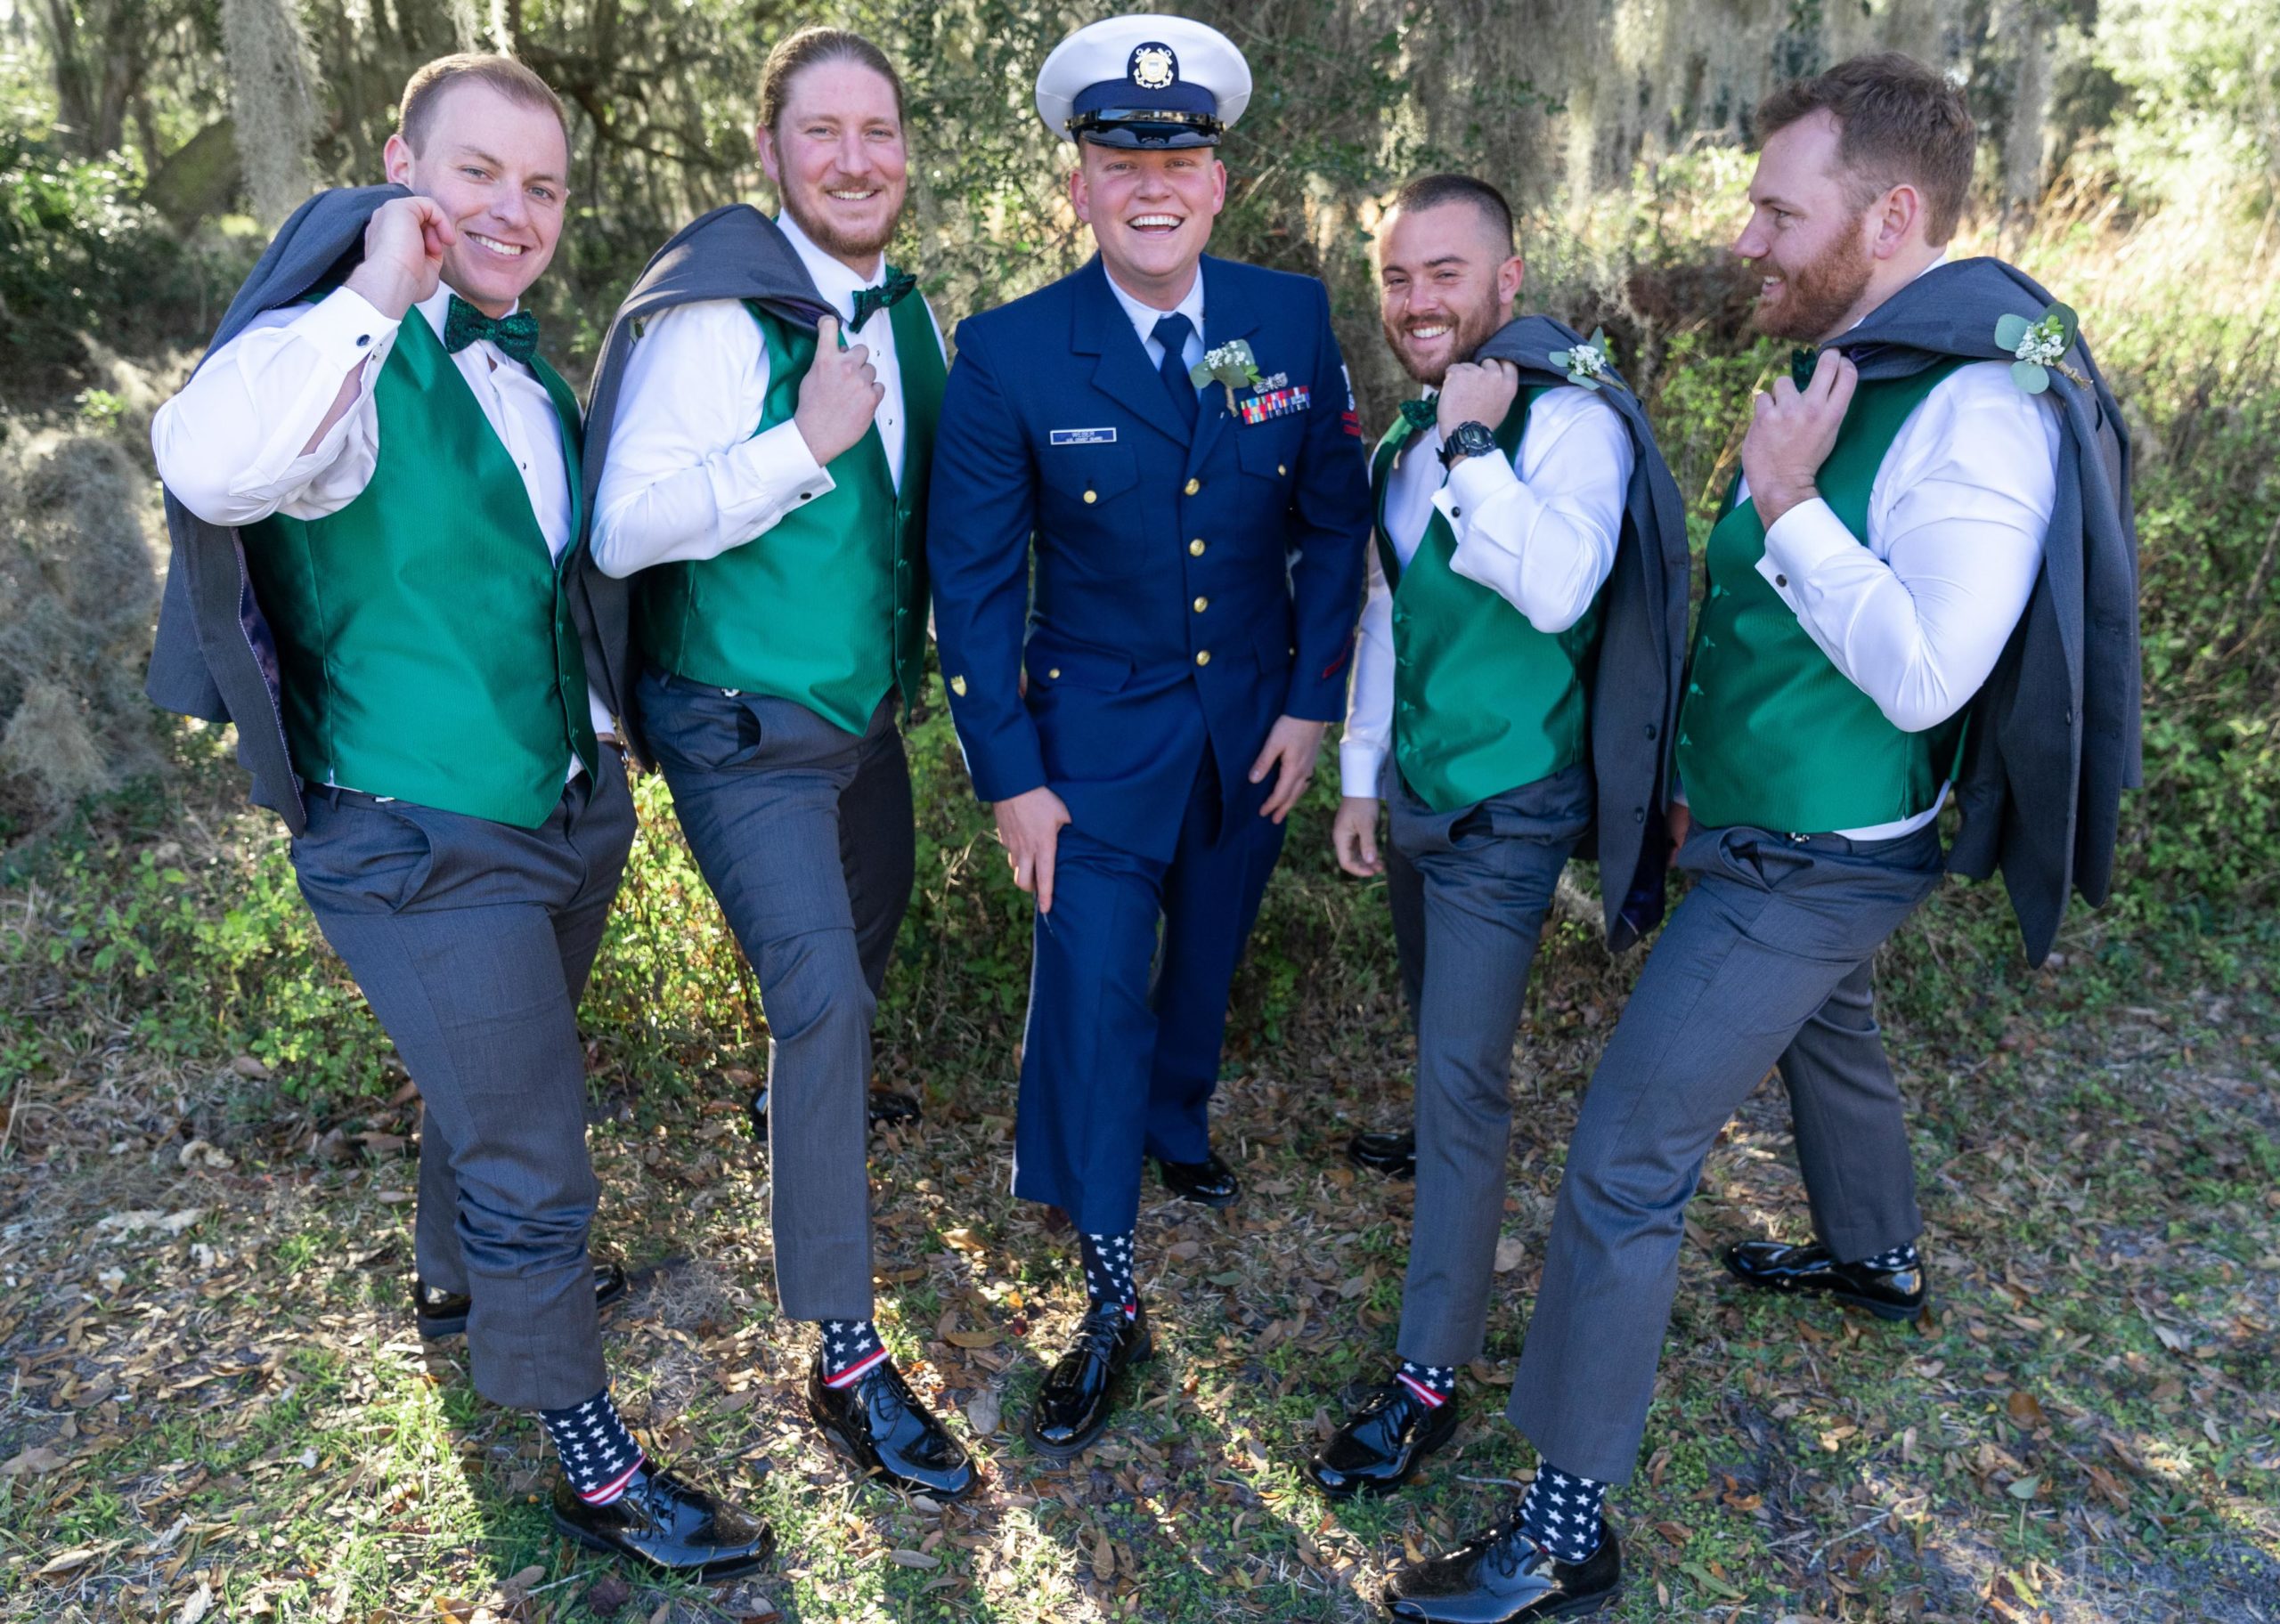 american flag groomsmen socks picture for wedding at the bluff venue in kingsland georgia